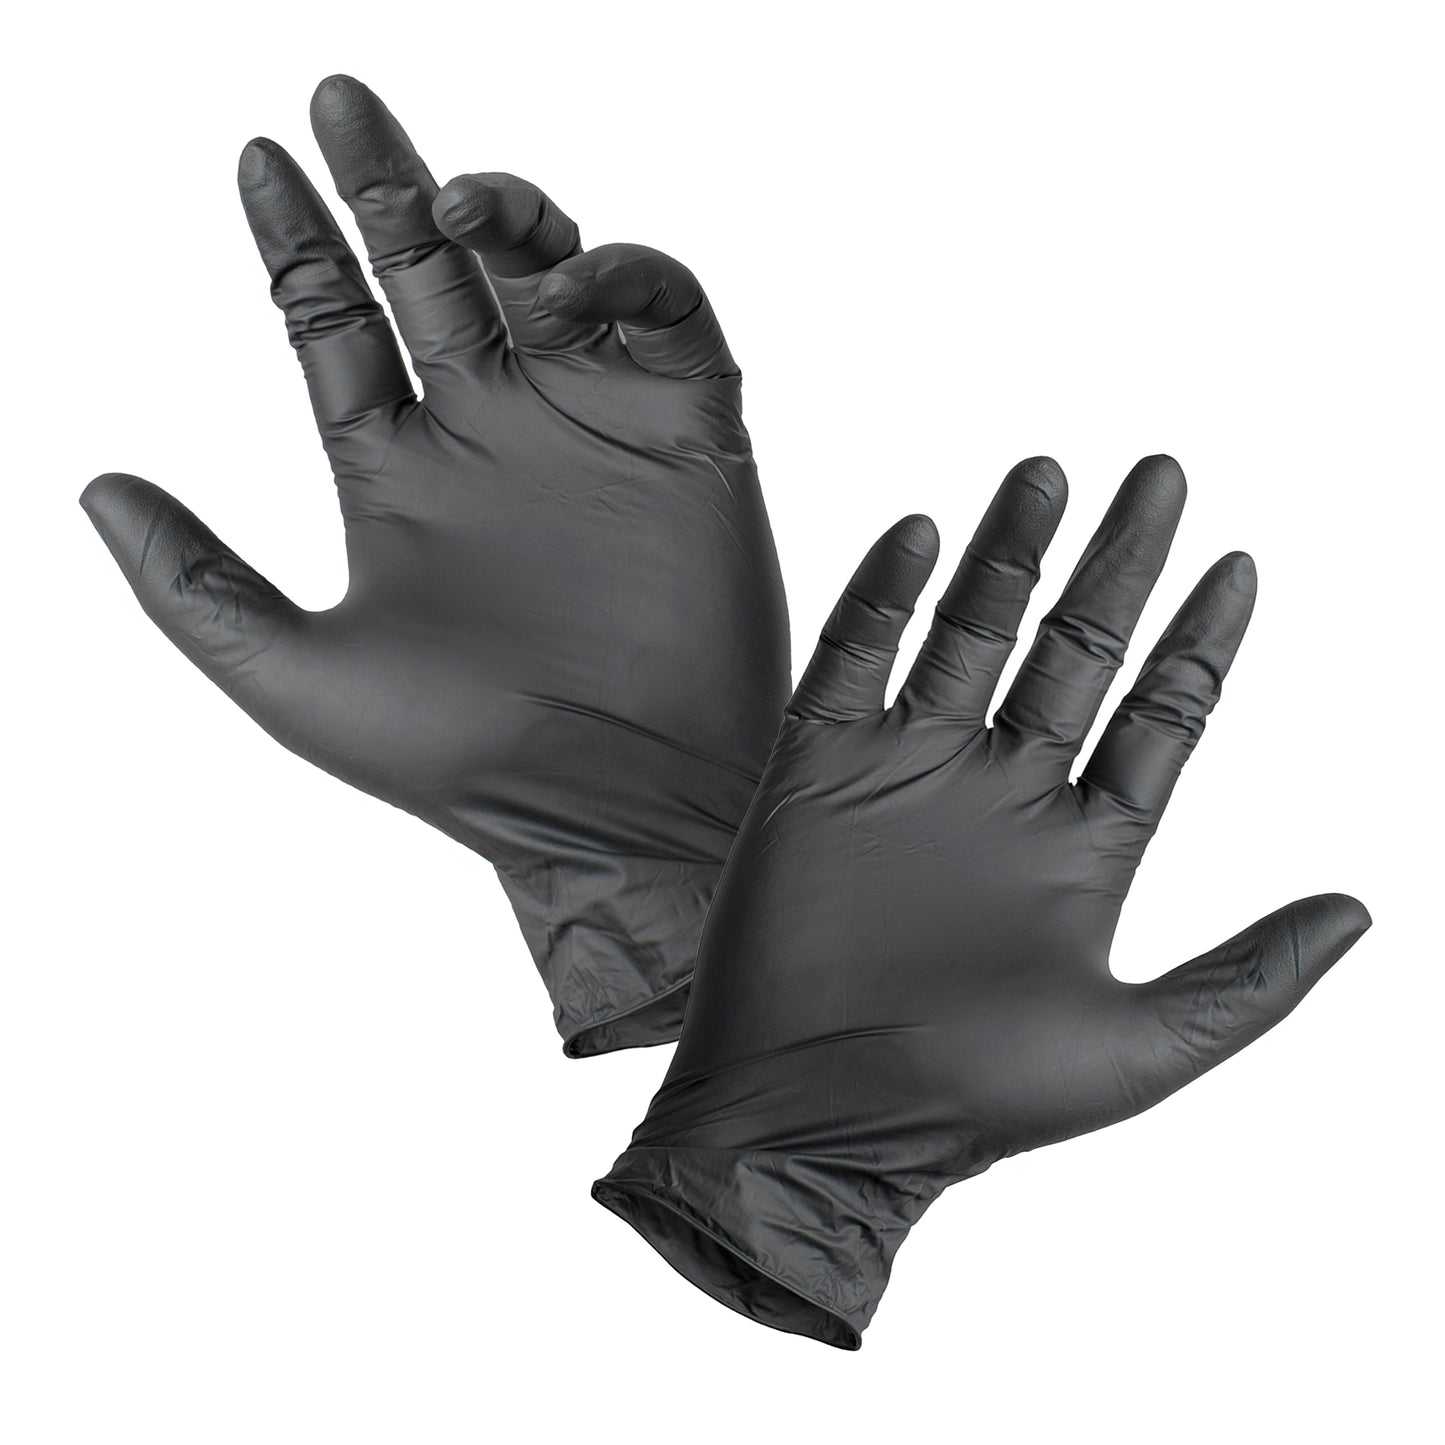 One Box (100 Gloves) Size Large -  Black Latex Powder Free Medical Exam Tattoos Piercing Gloves -